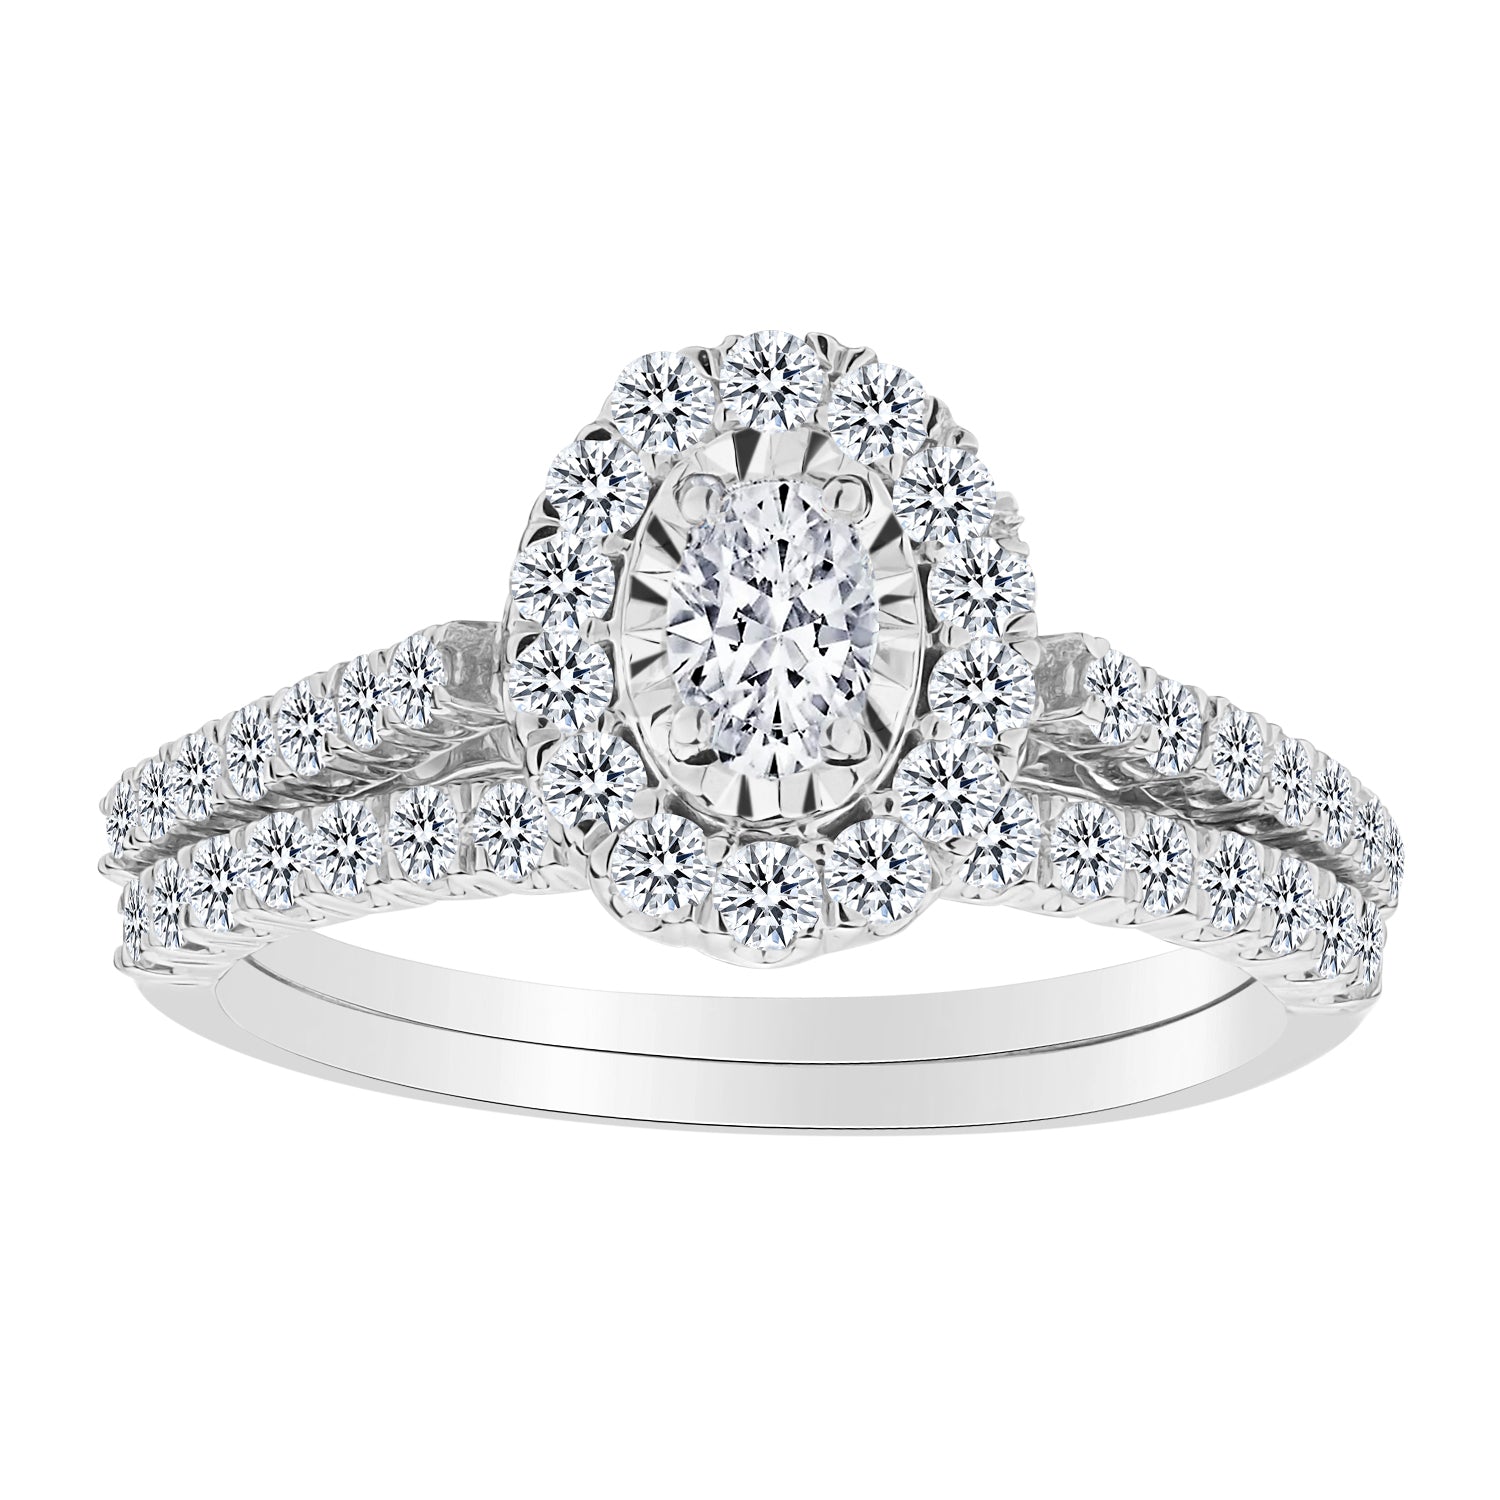 .33 Carat Oval Shape Centre,  1.00 Carat Total Diamond Ring Set,  14kt White Gold. Griffin Jewellery Designs